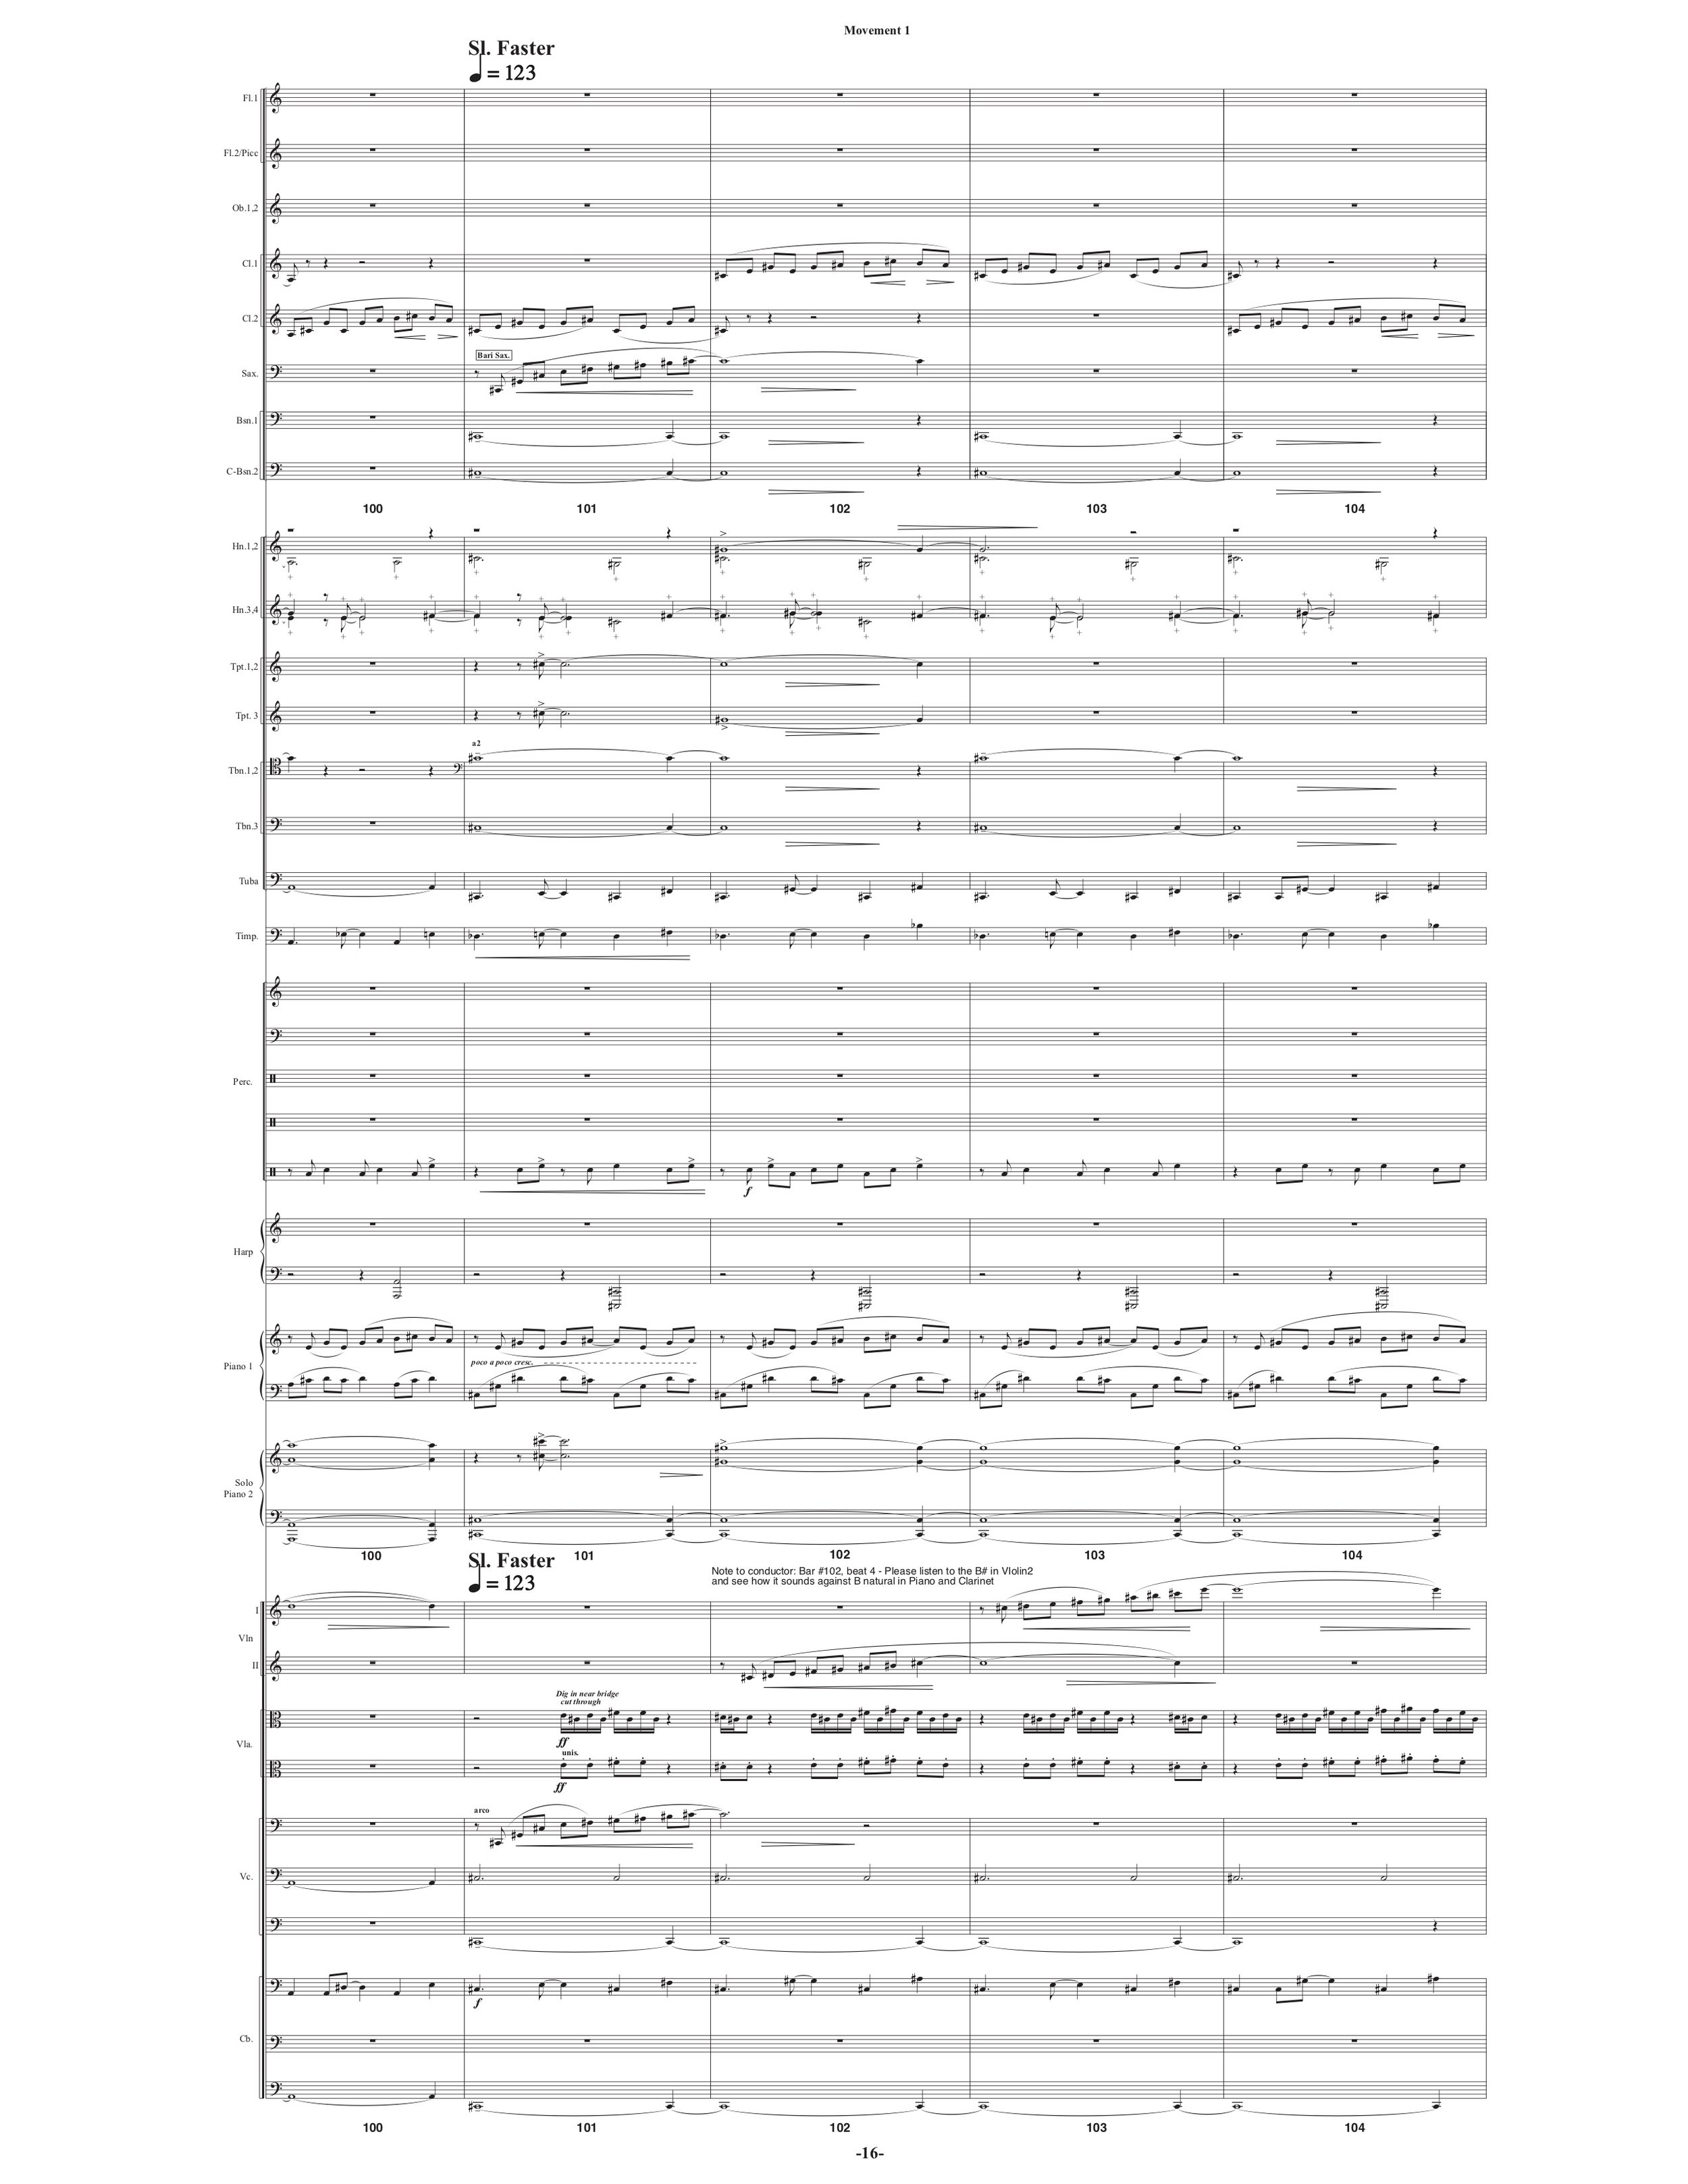 Symphony_Orch & 2 Pianos p21.jpg